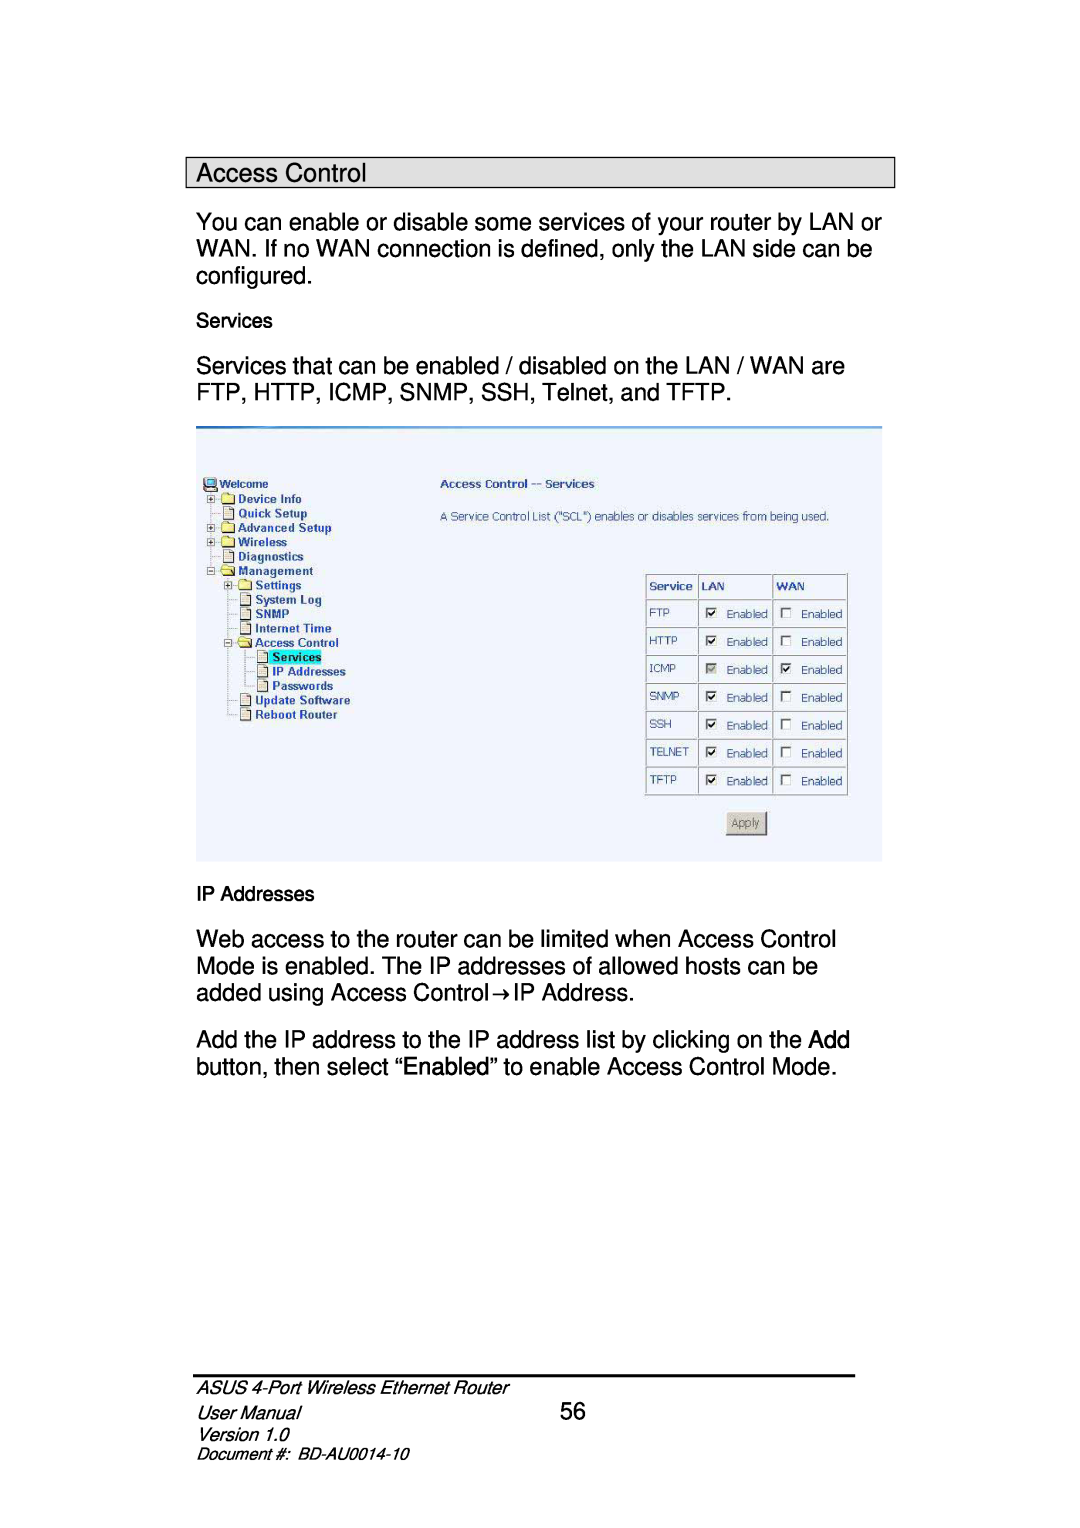 Asus BD-AU0014-10 user manual Access Control, Services, IP Addresses 